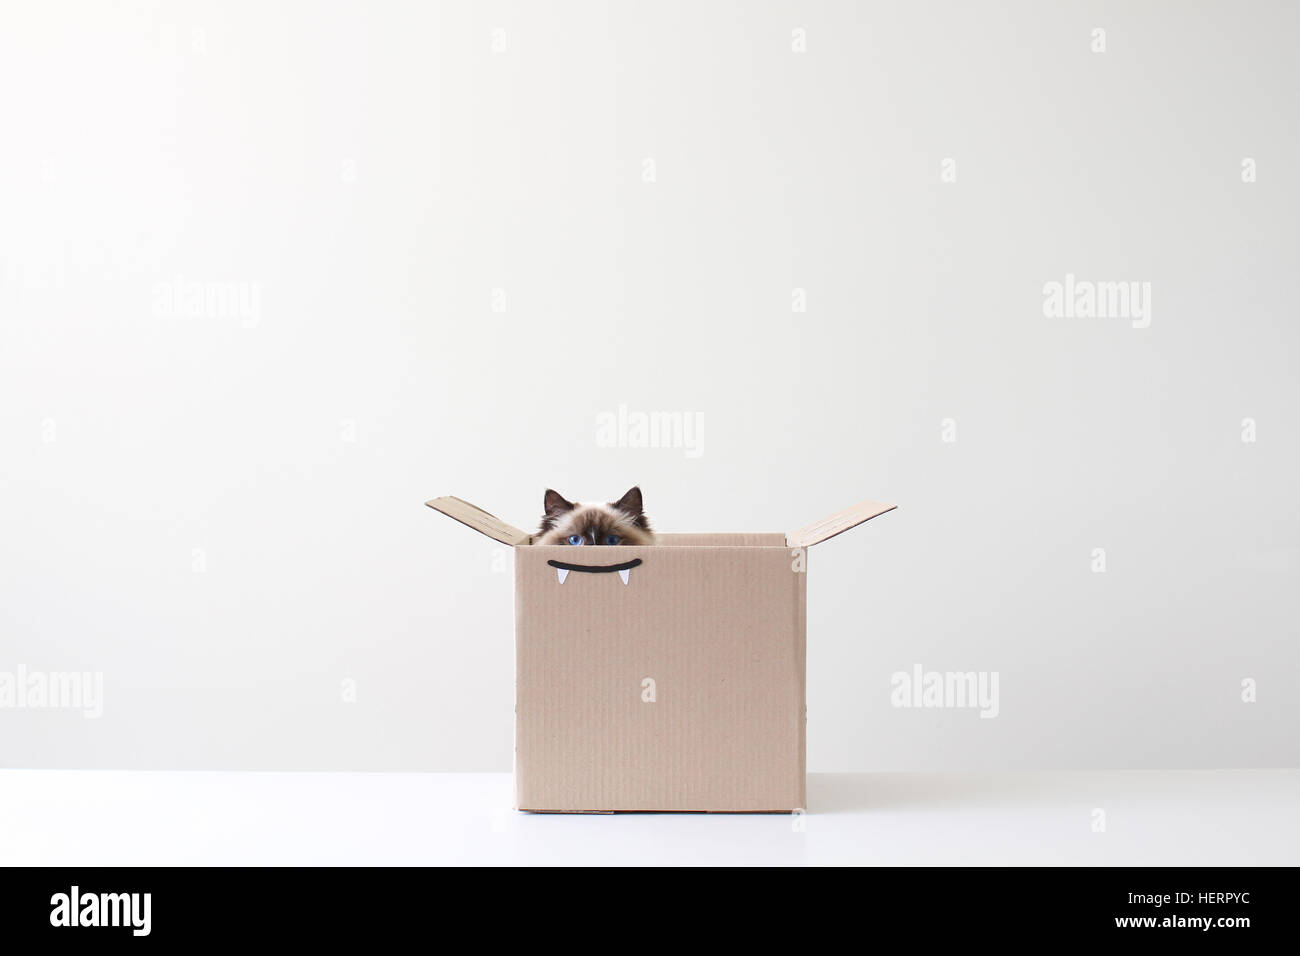 Ragdoll cat hiding in cardboard box with vampire teeth drawing Stock Photo